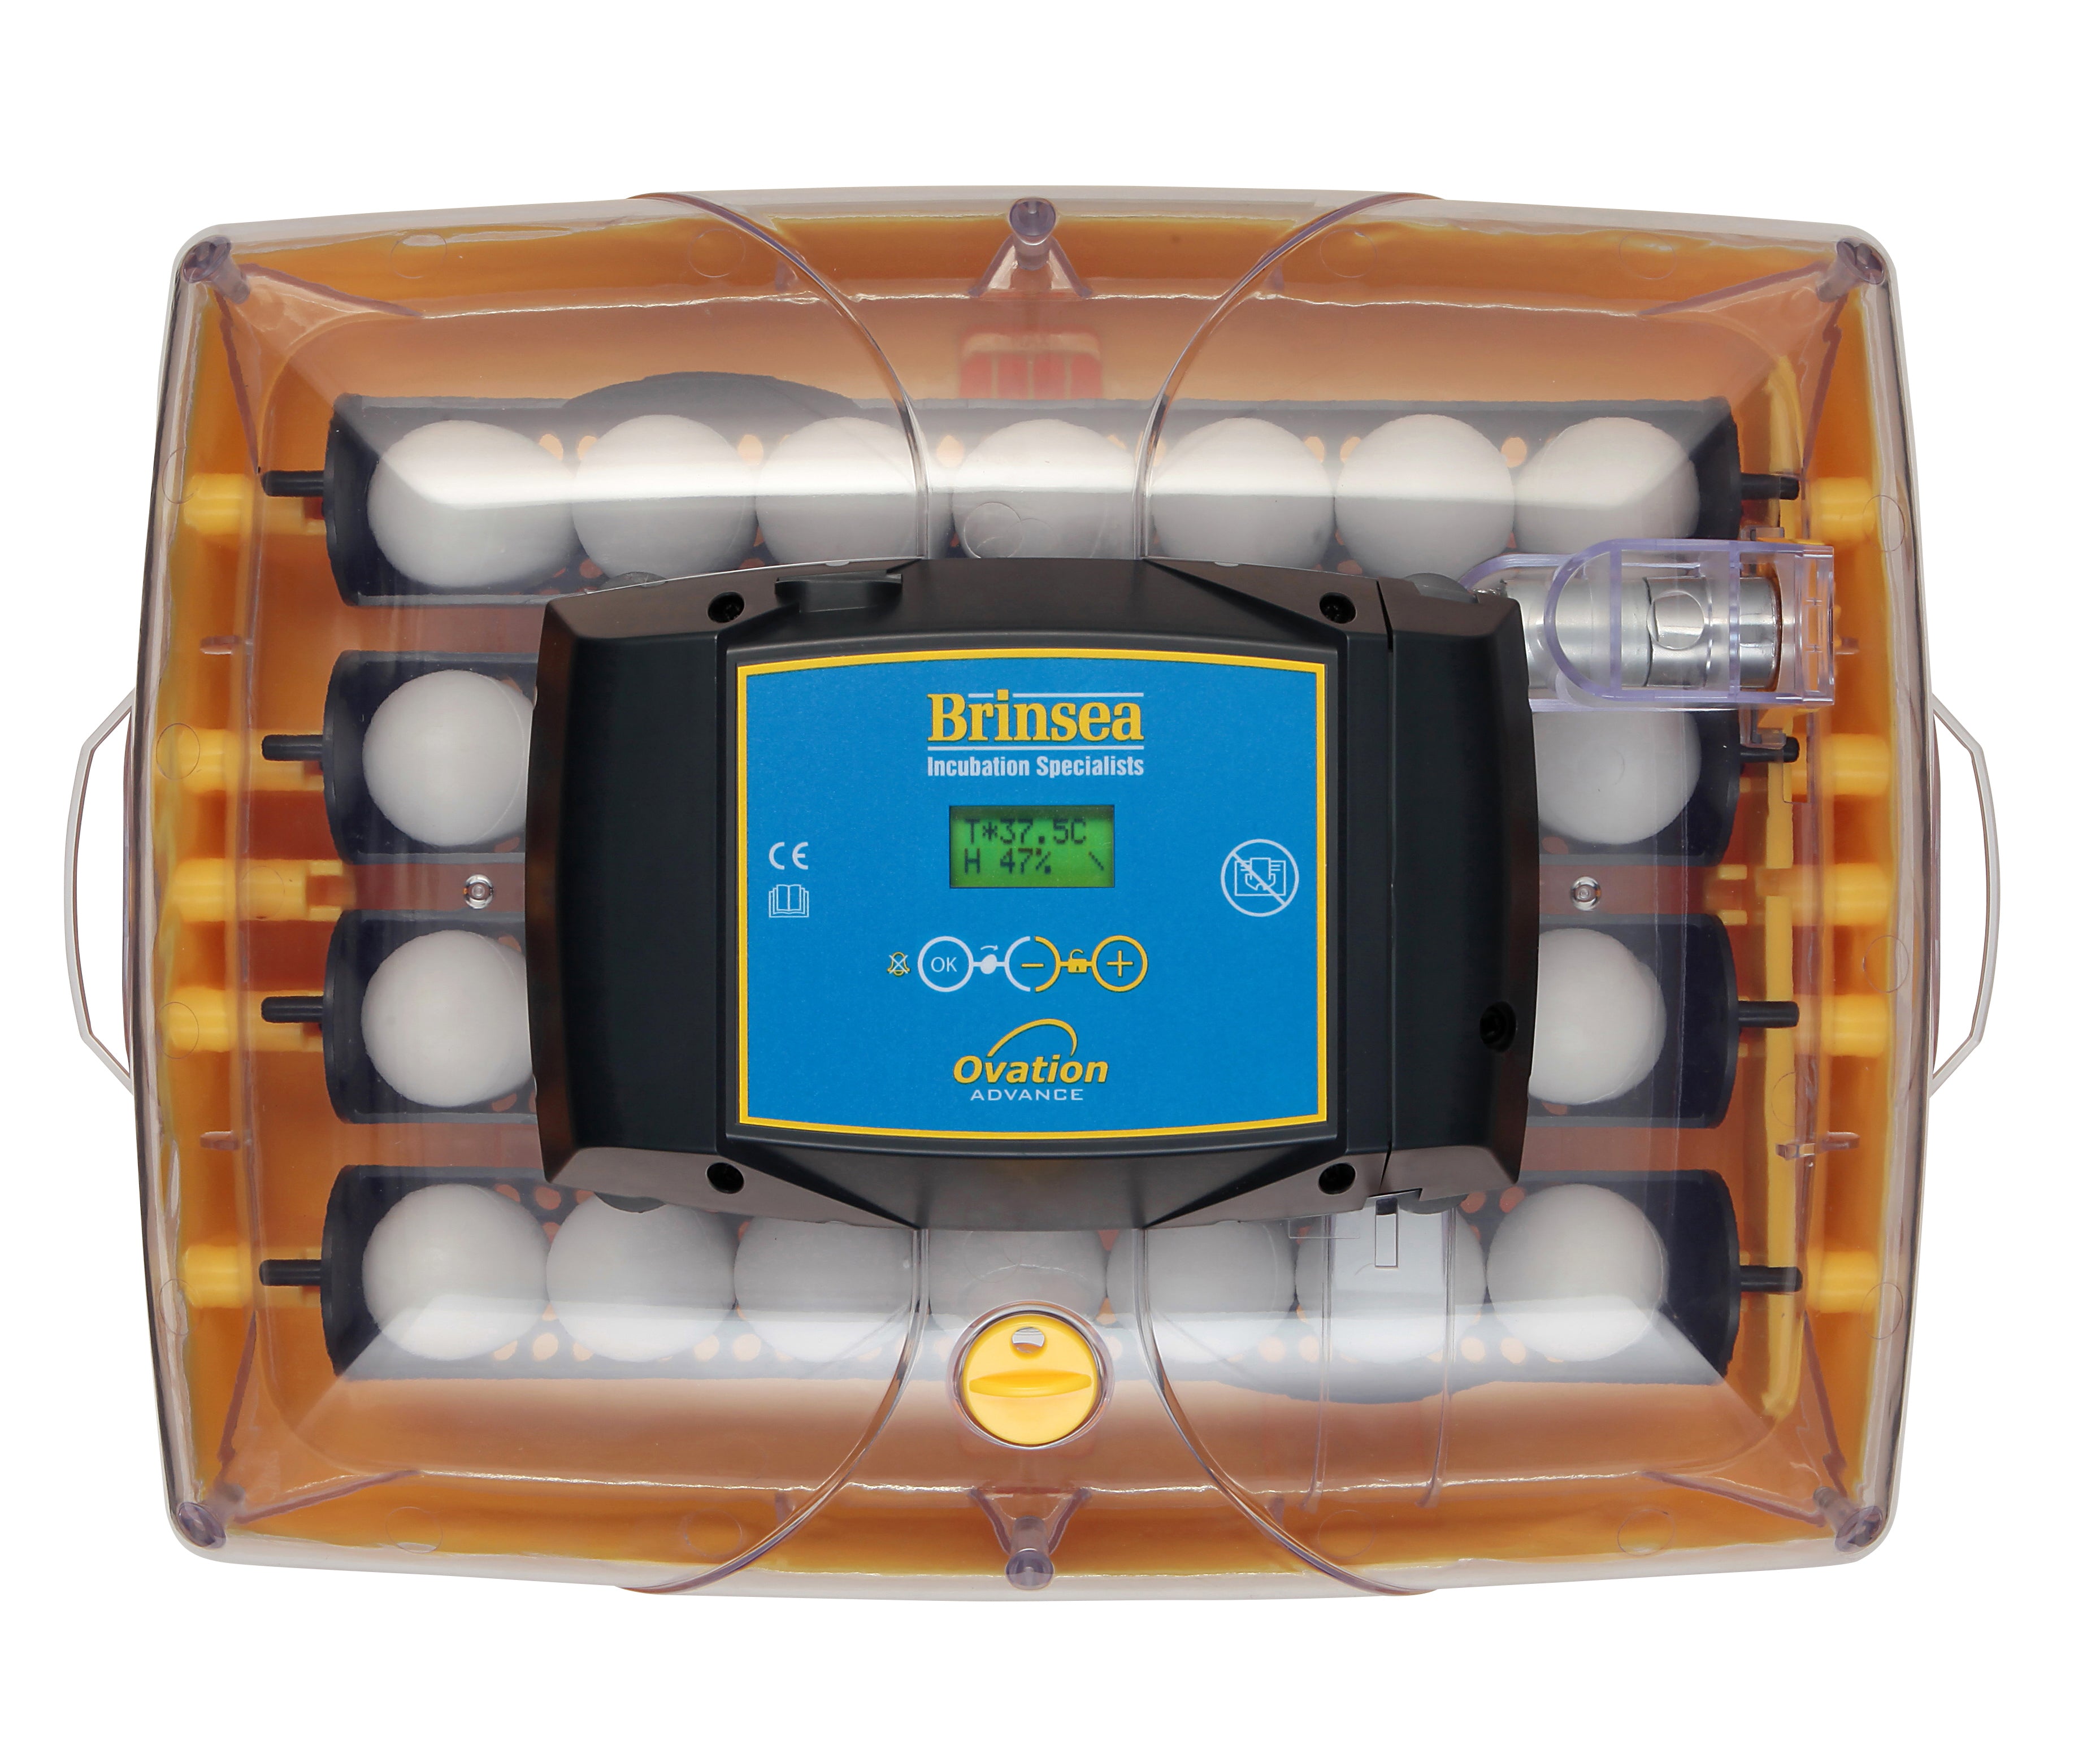 Egg-Incubator "Brinsea Ovation 28 Advance"